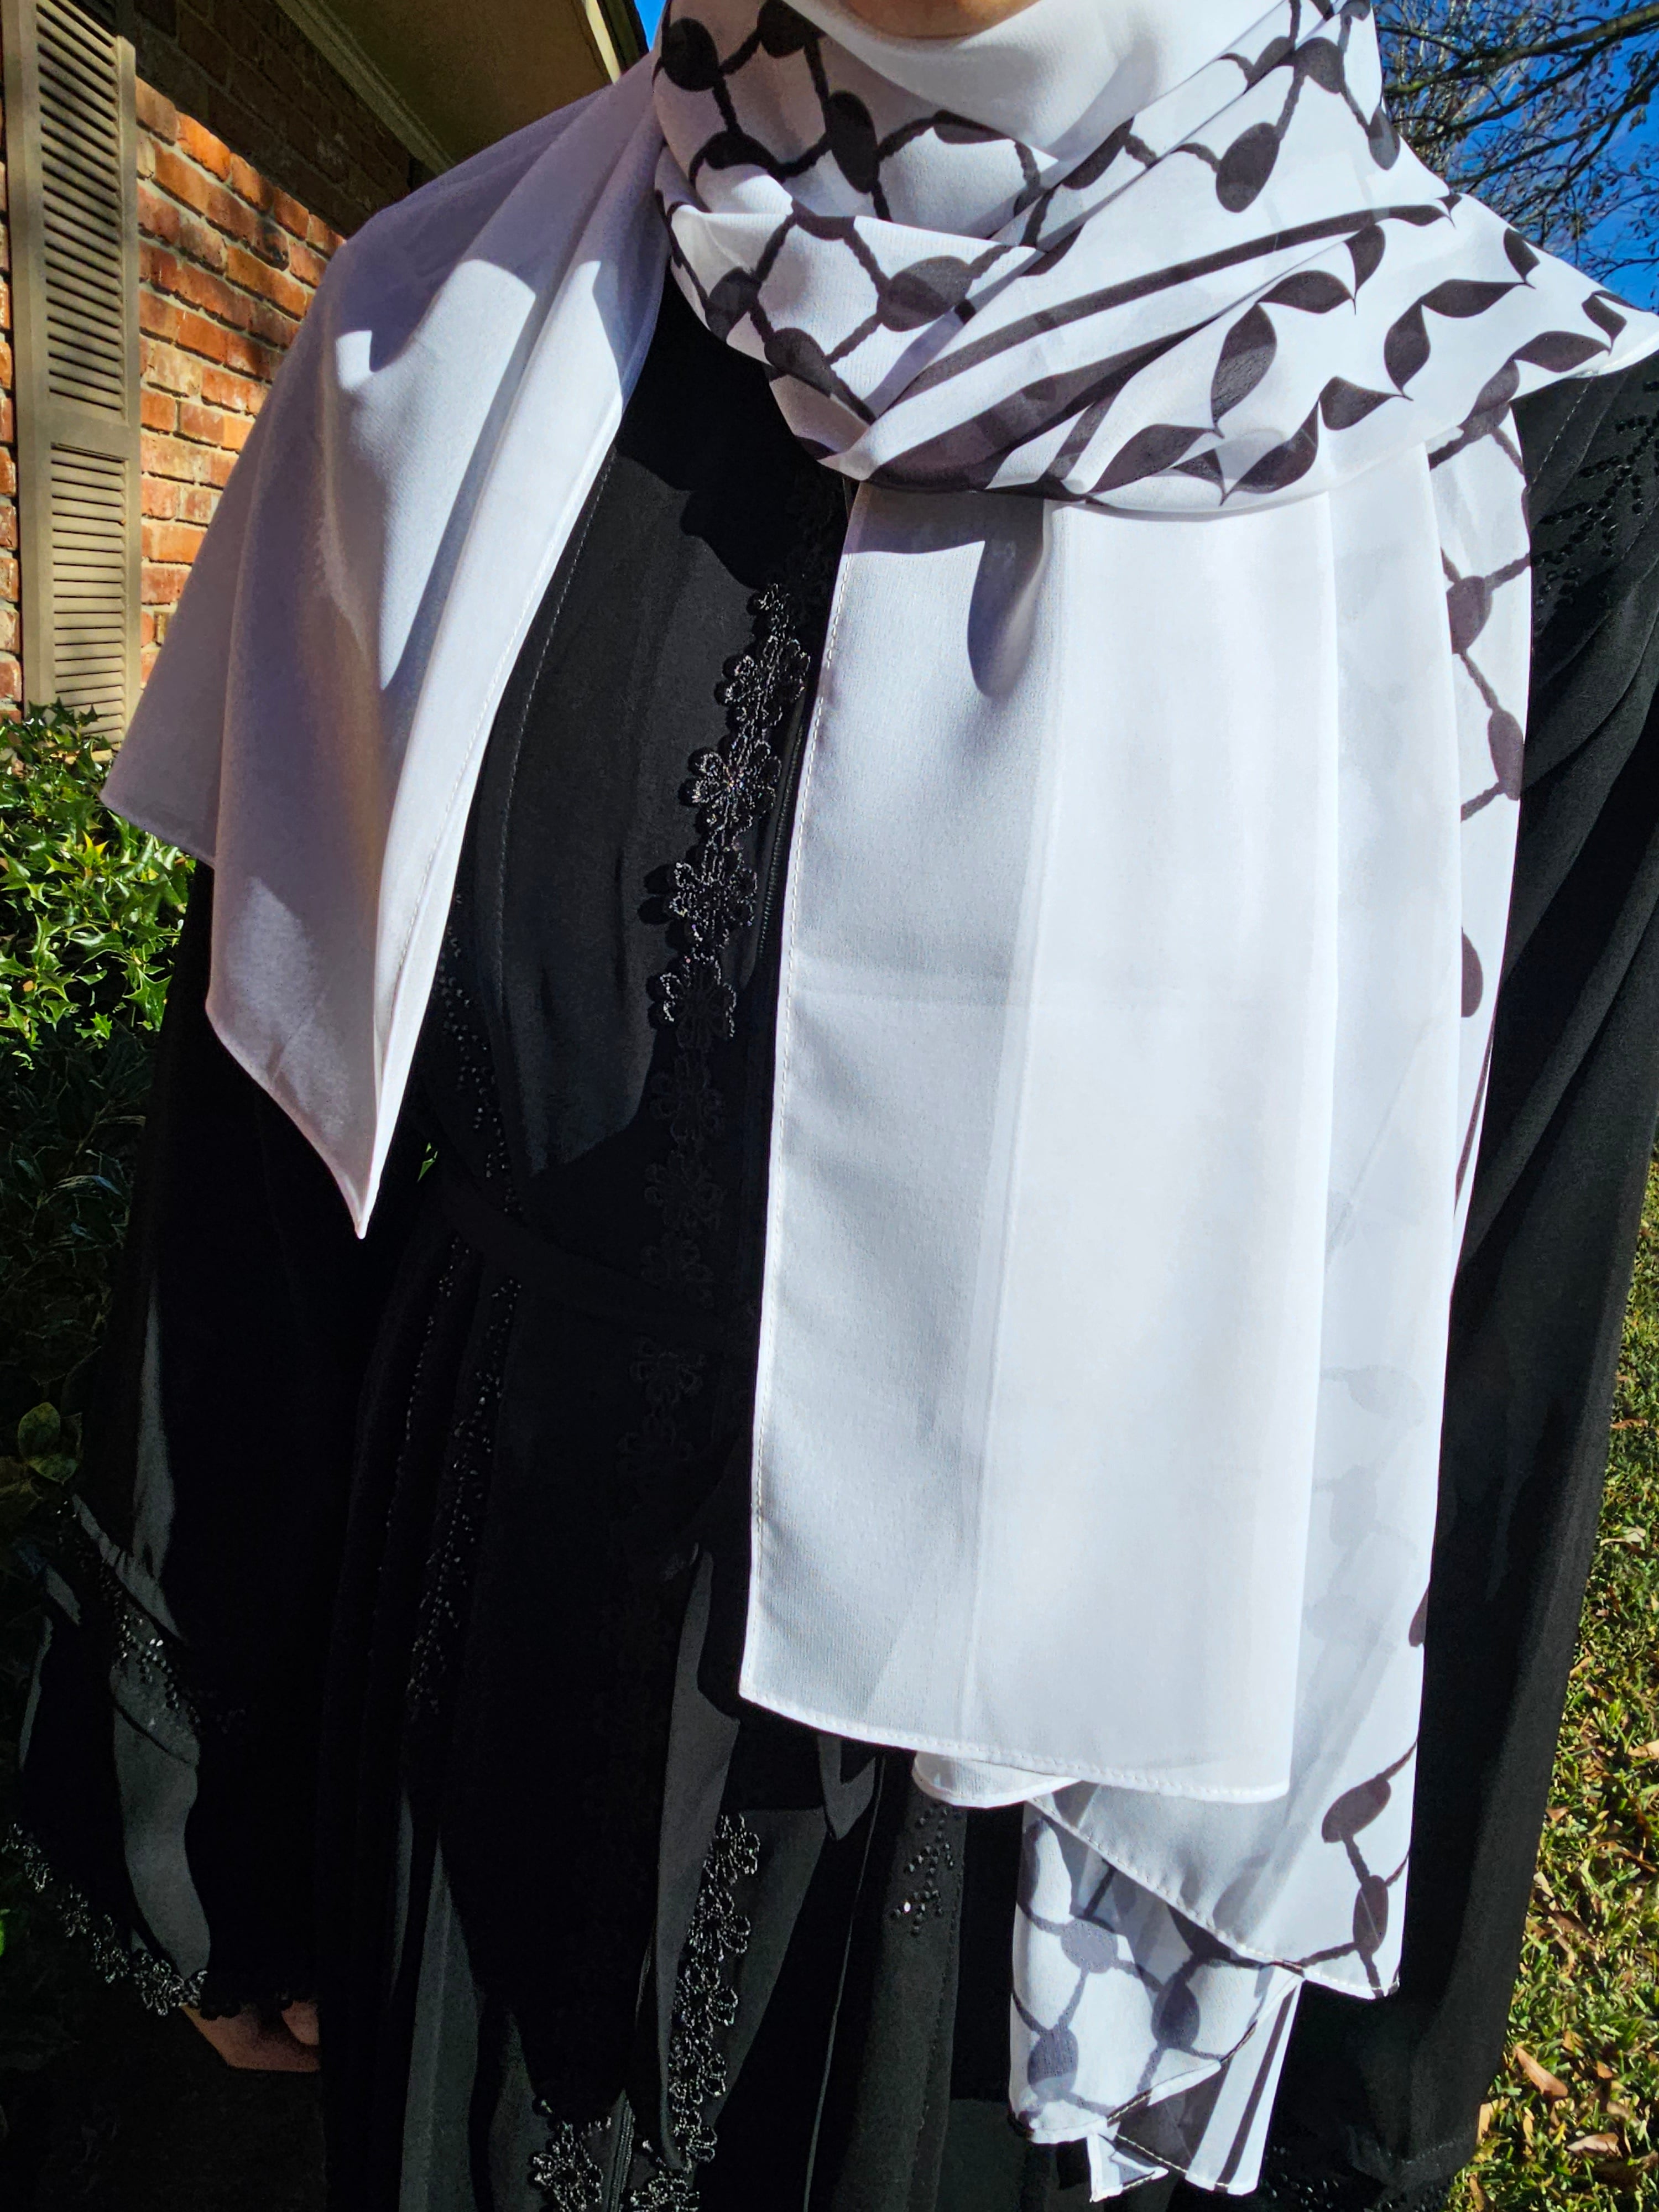 Keffiyeh Chiffon Hijab Scarf - Habibi Heritage